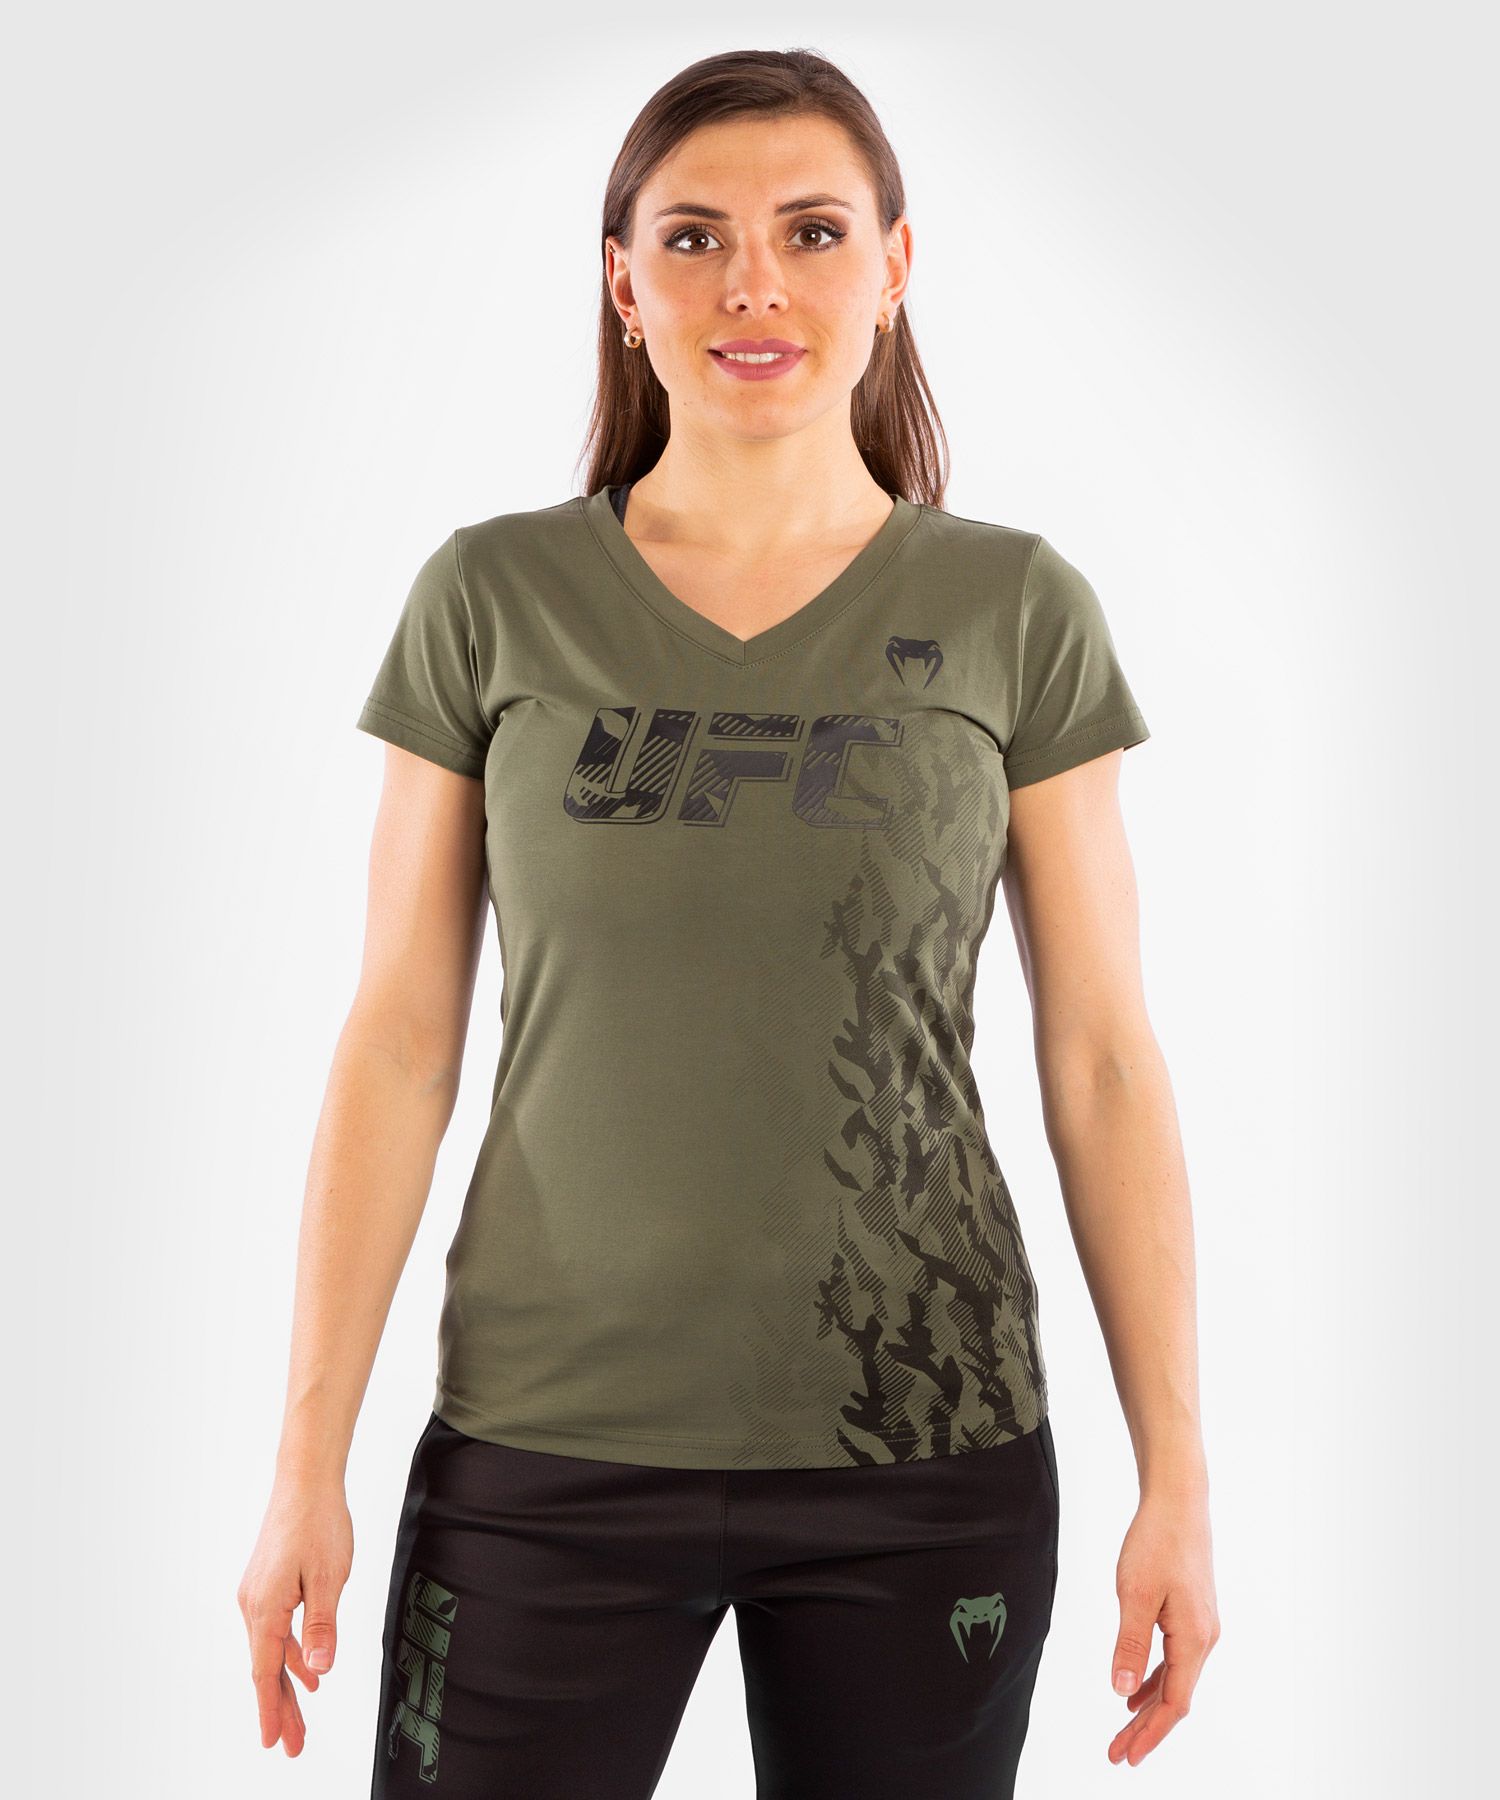 Camiseta De Algodón Manga Corta Para Mujer UFC Venum Authentic Fight Week - Caqui